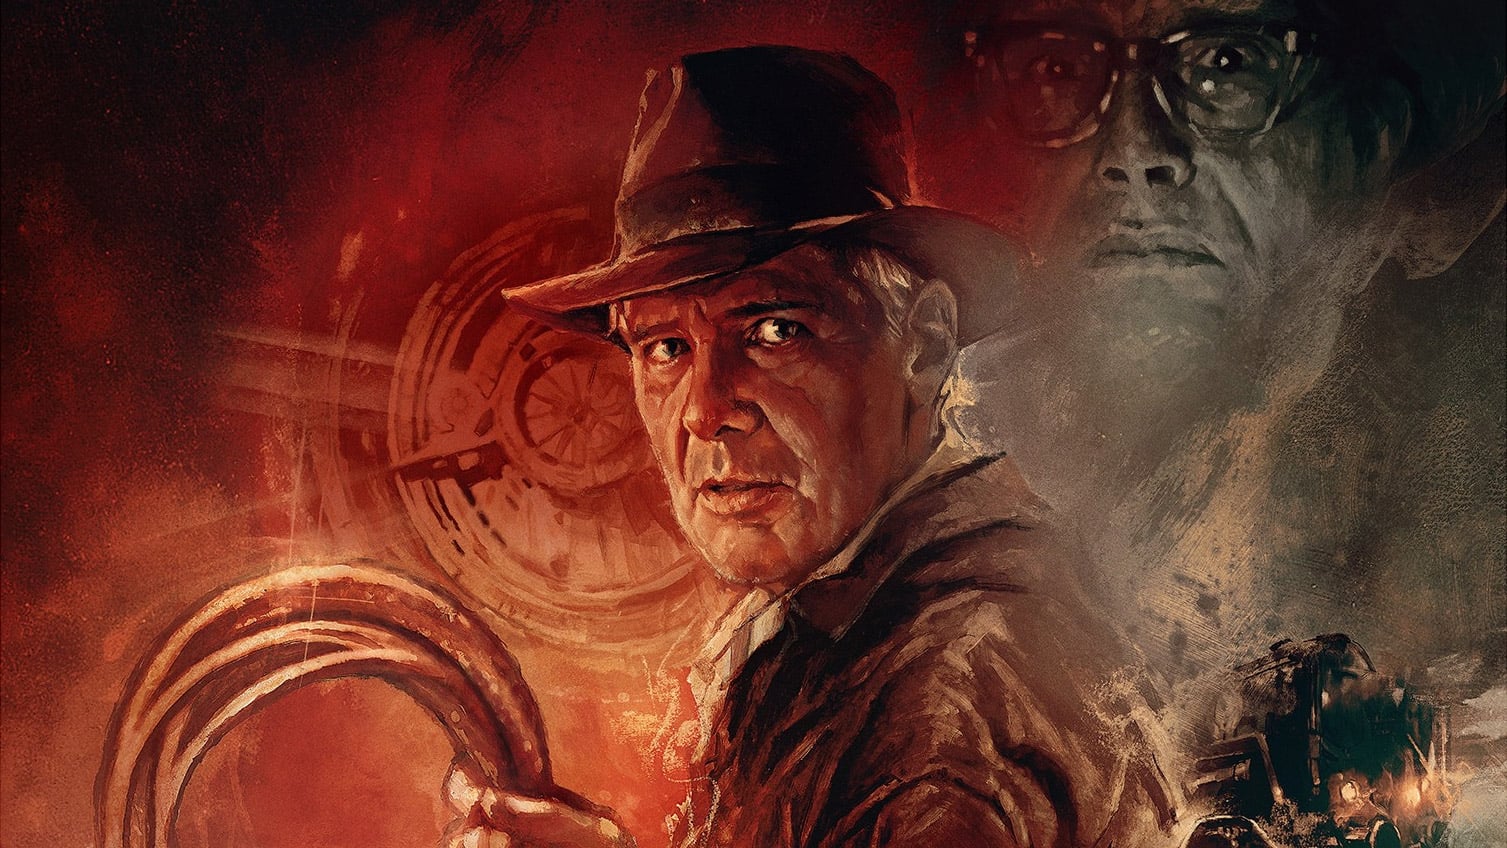 Image du film Indiana Jones et le Cadran de la Destinée 4zju62h1m6wnwuxg5cls20rmi2kjpg